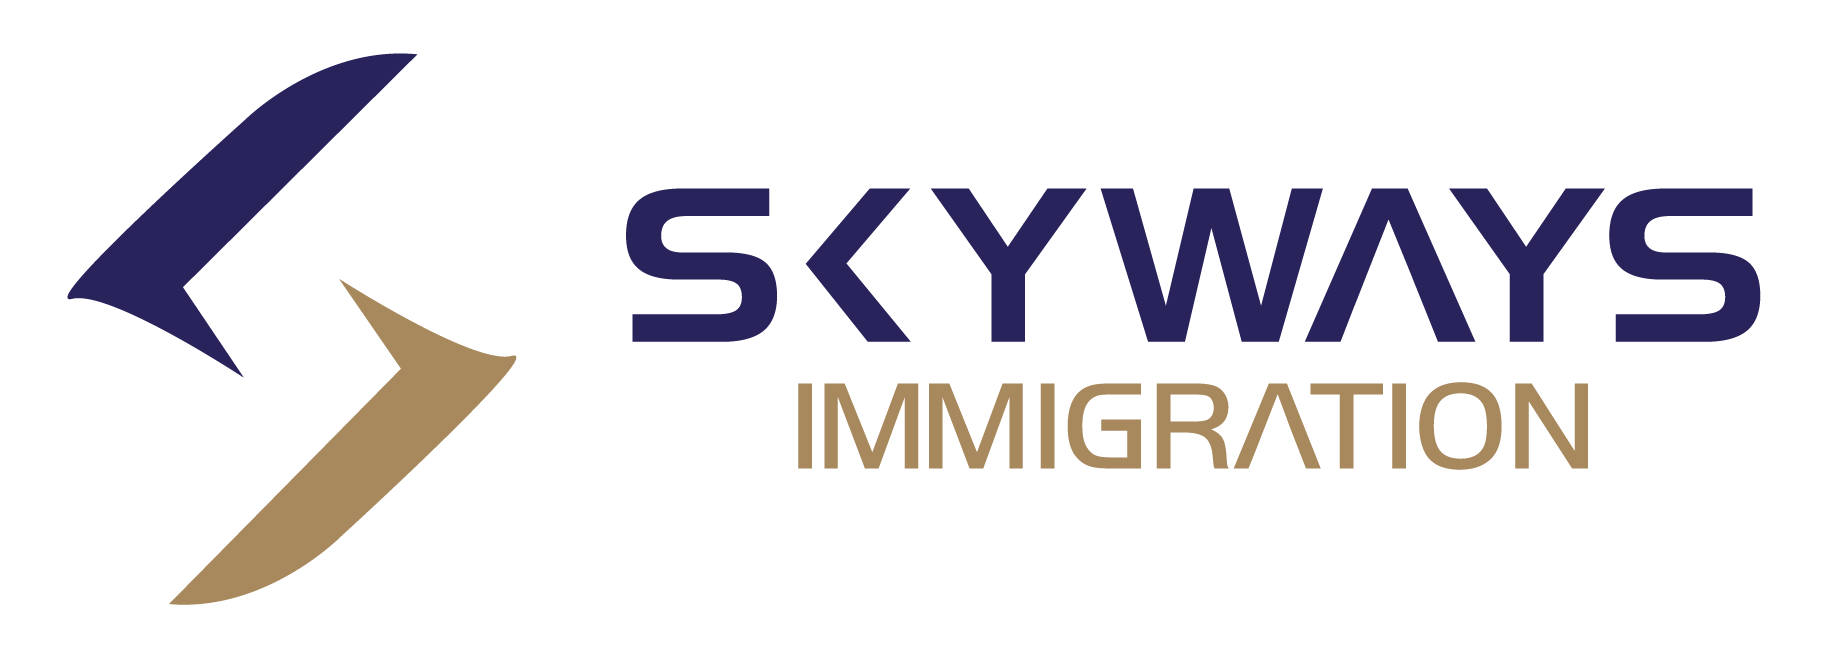 Skyways Immigration Logo